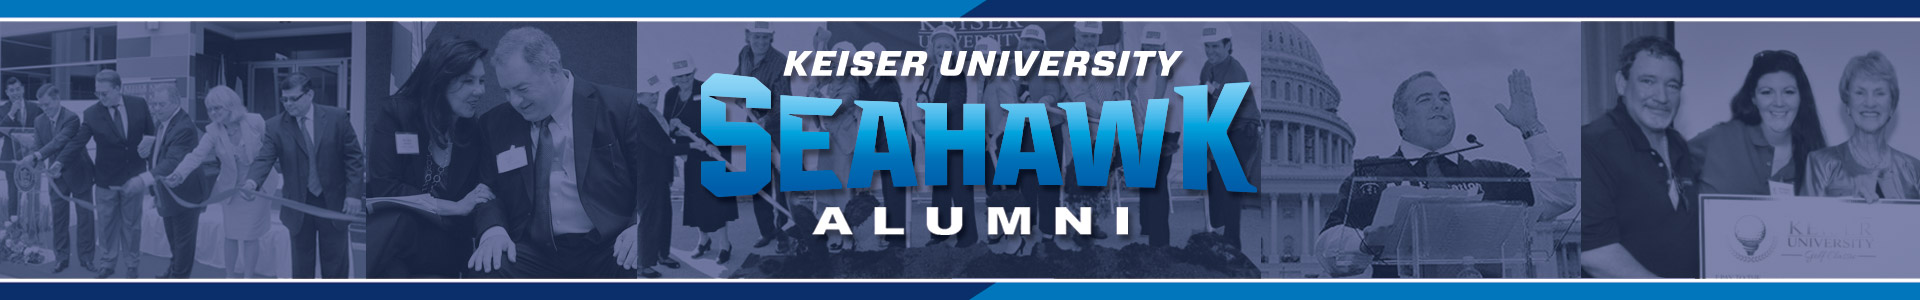 Keiser University | Seahawk Alumni